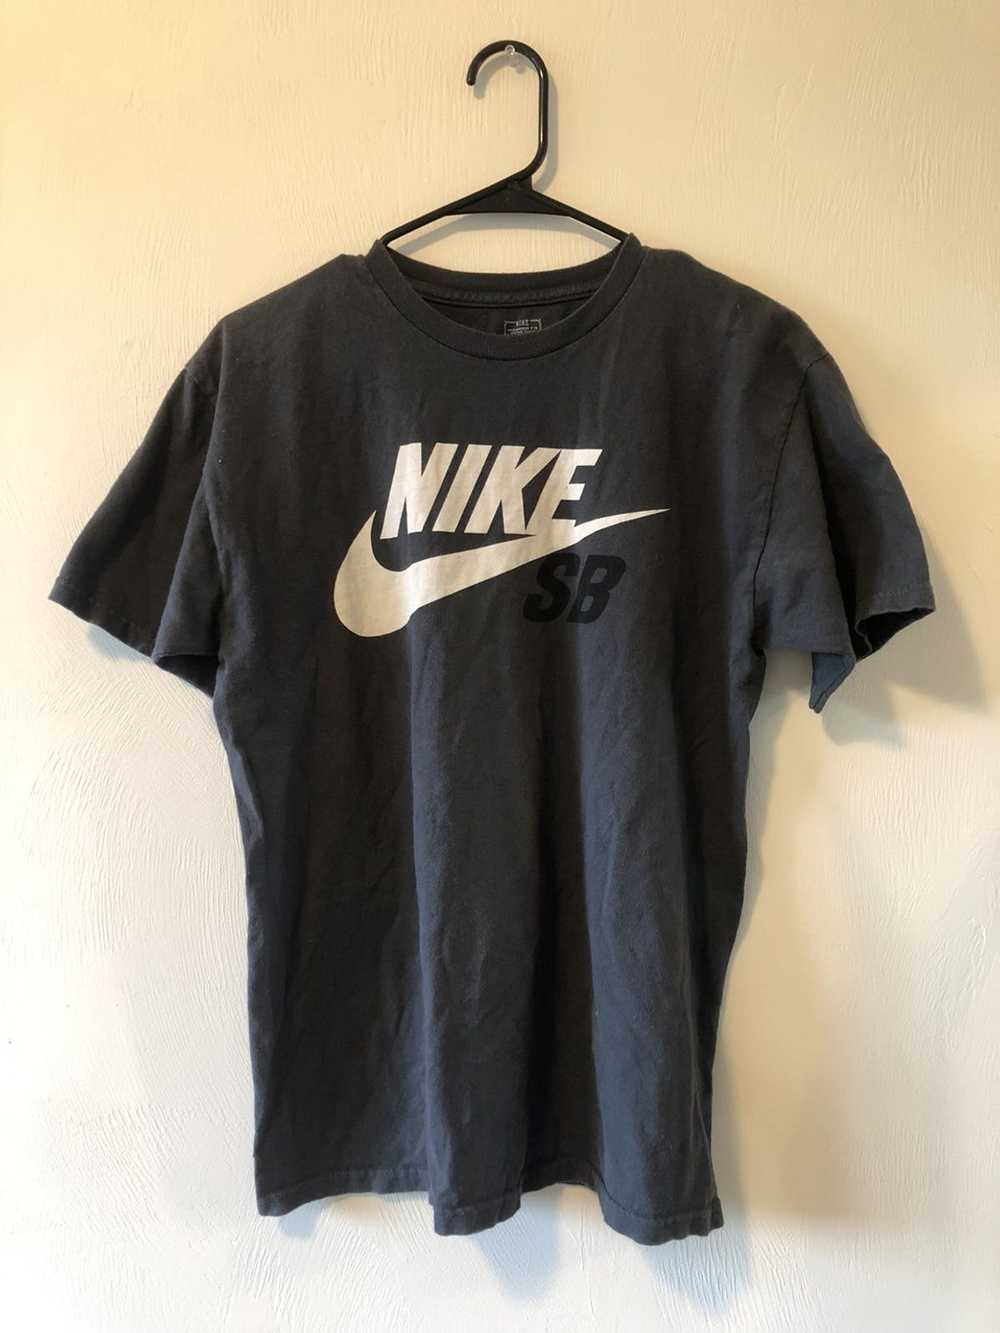 Nike Nike SB Charcoal Grey T-Shirt - image 1